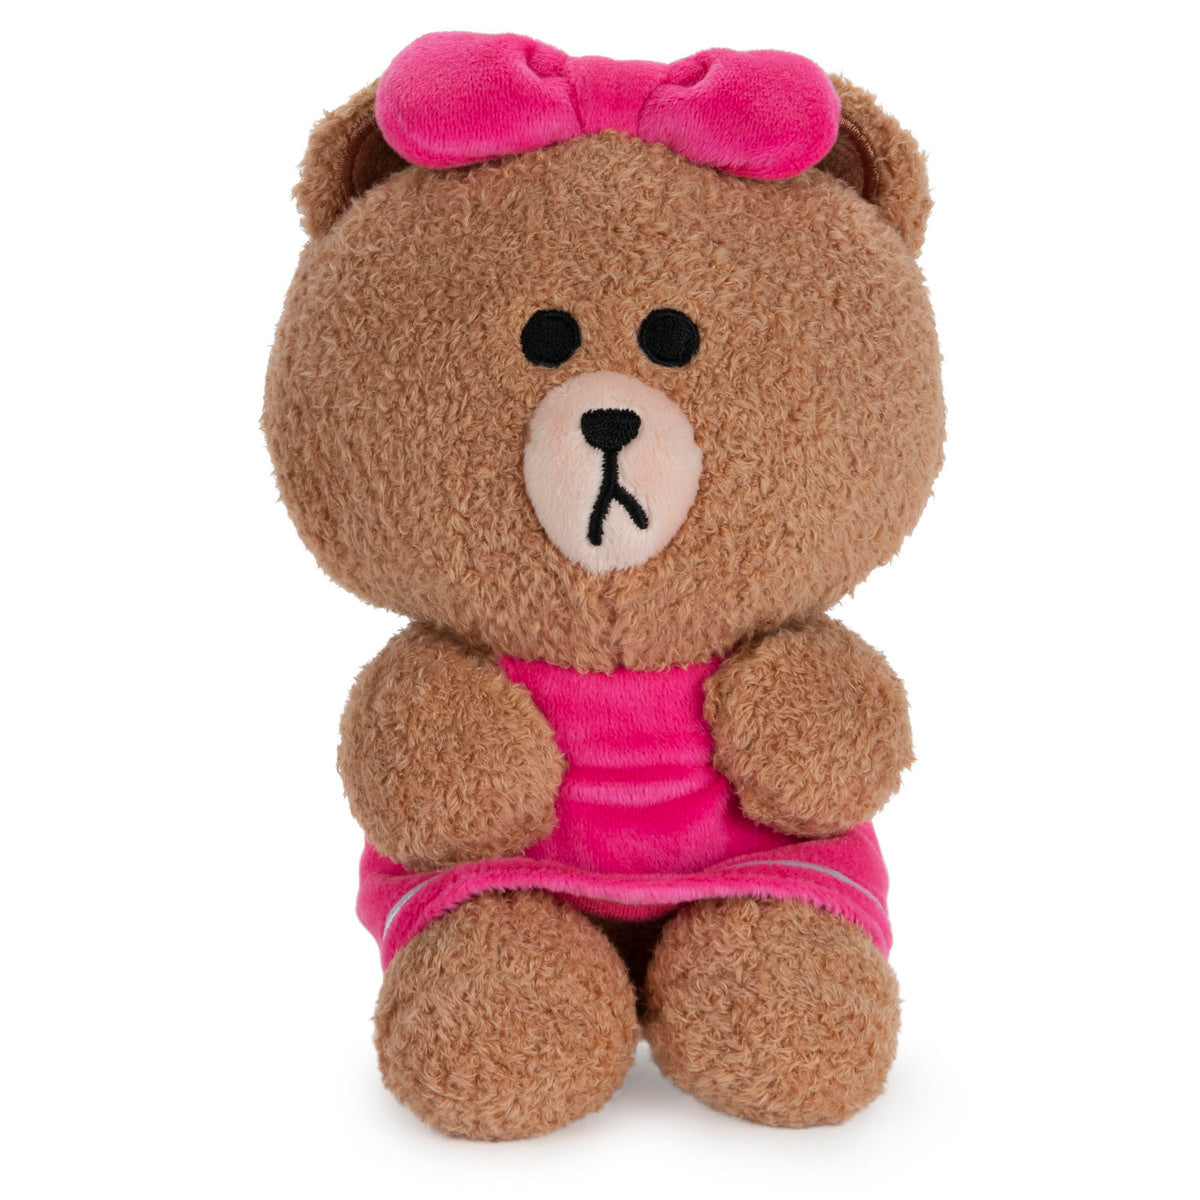 Baby Gund Plush Toy 20cm - Choco Bear